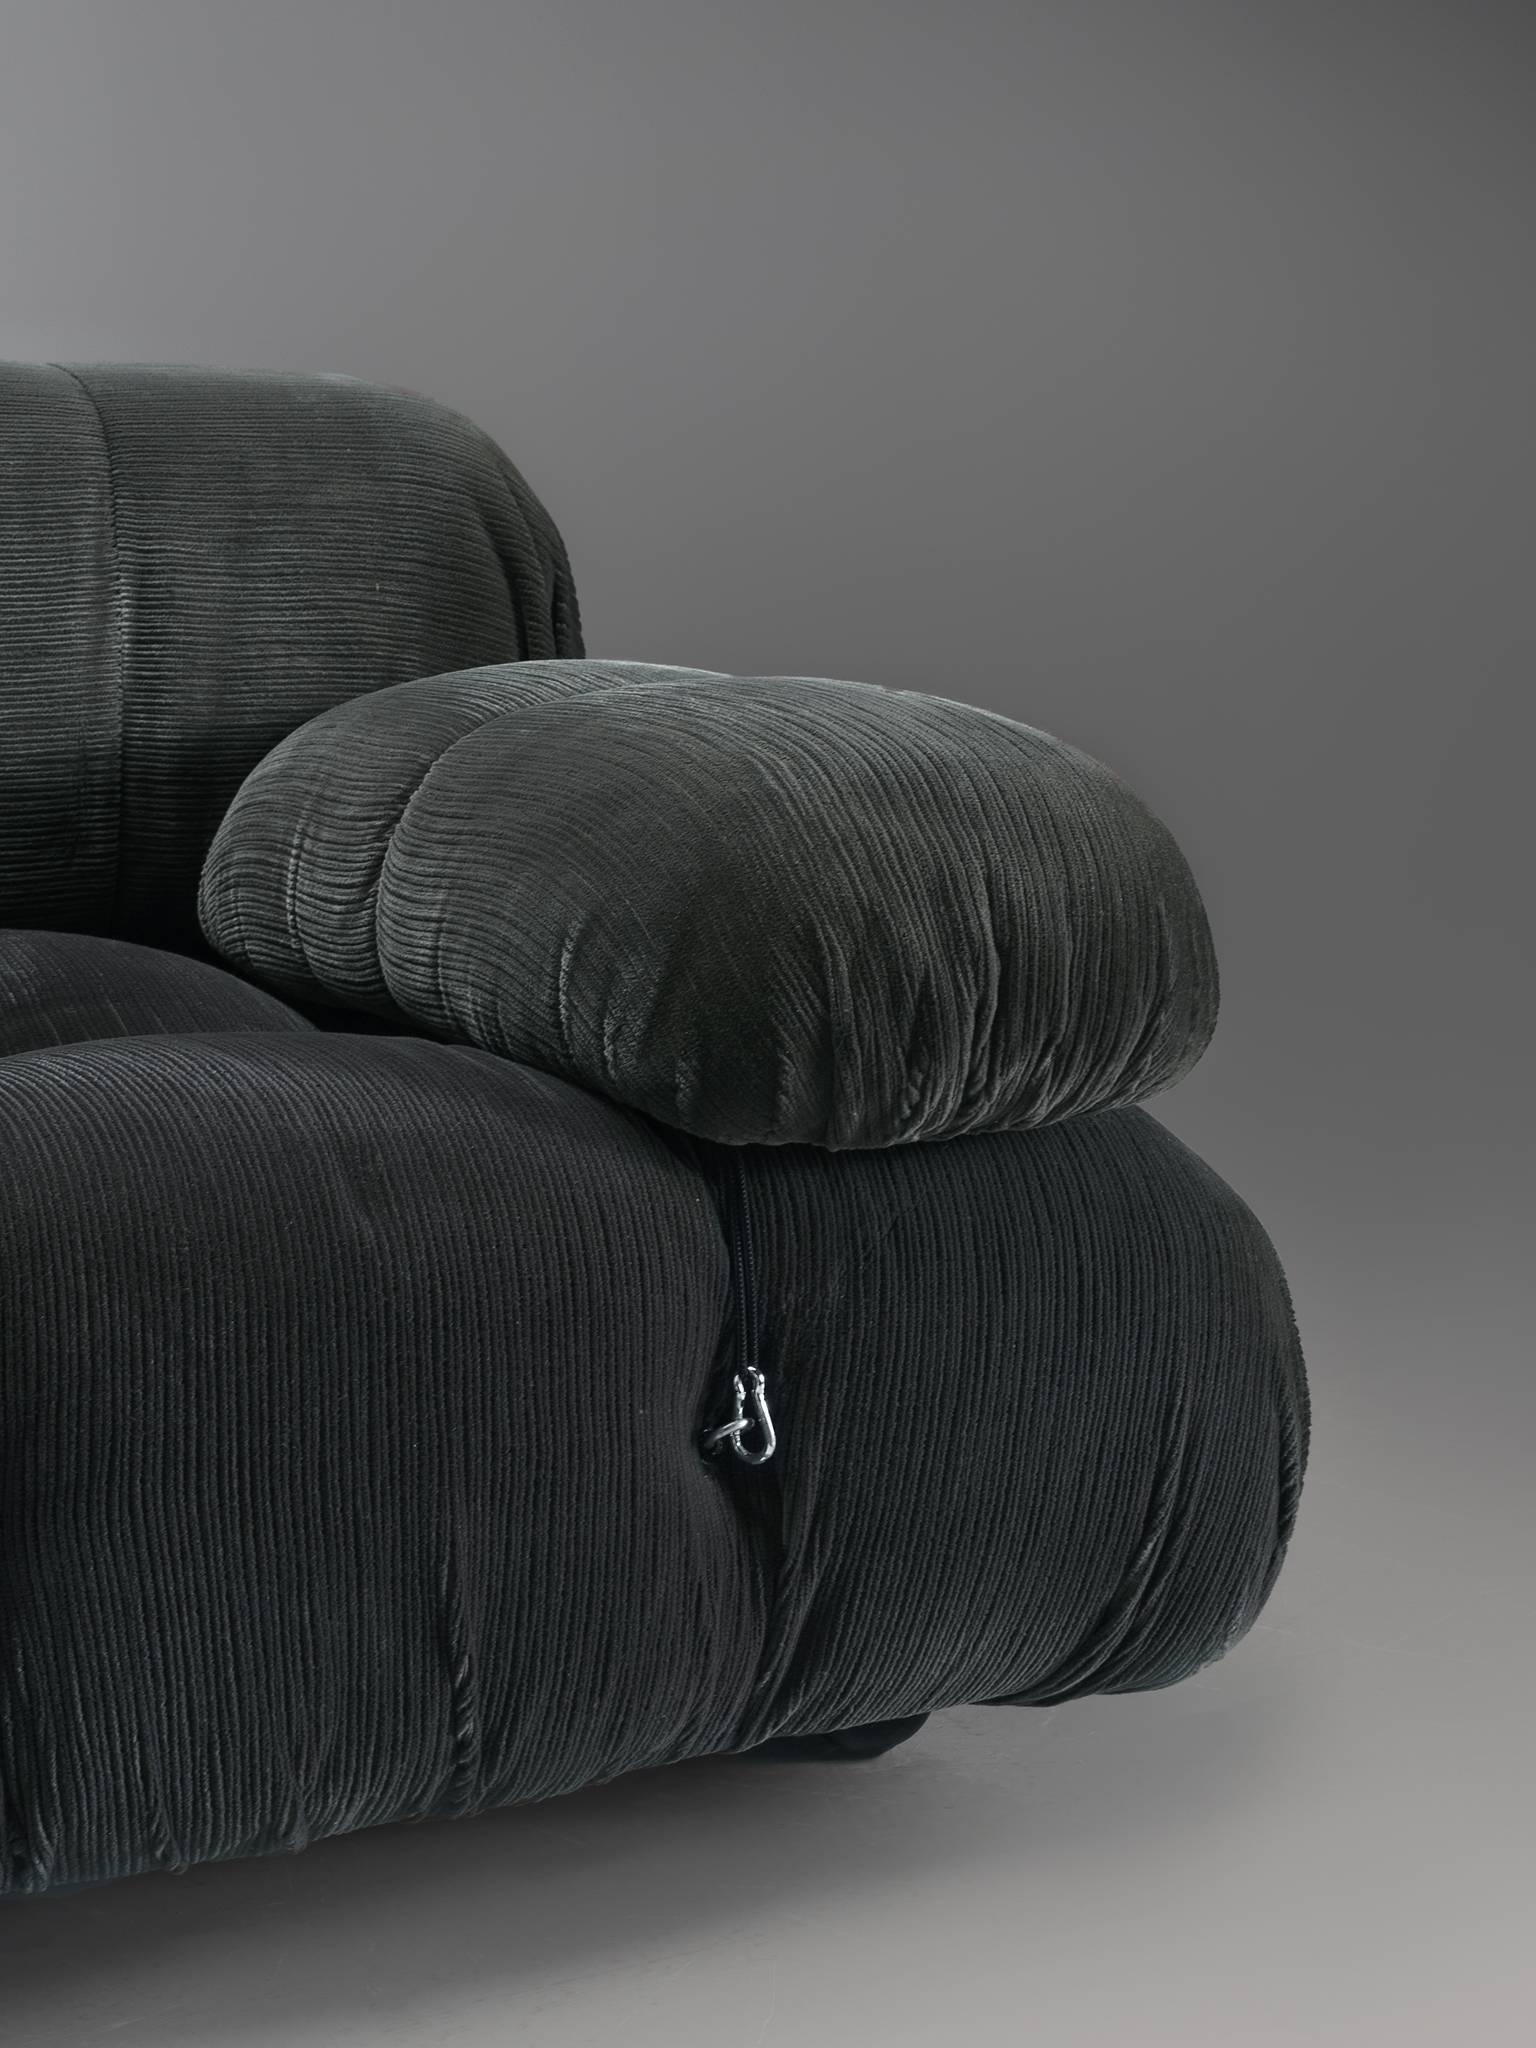 Mario Bellini Original Fabric 'Camaleonda' Modular Sofa 1